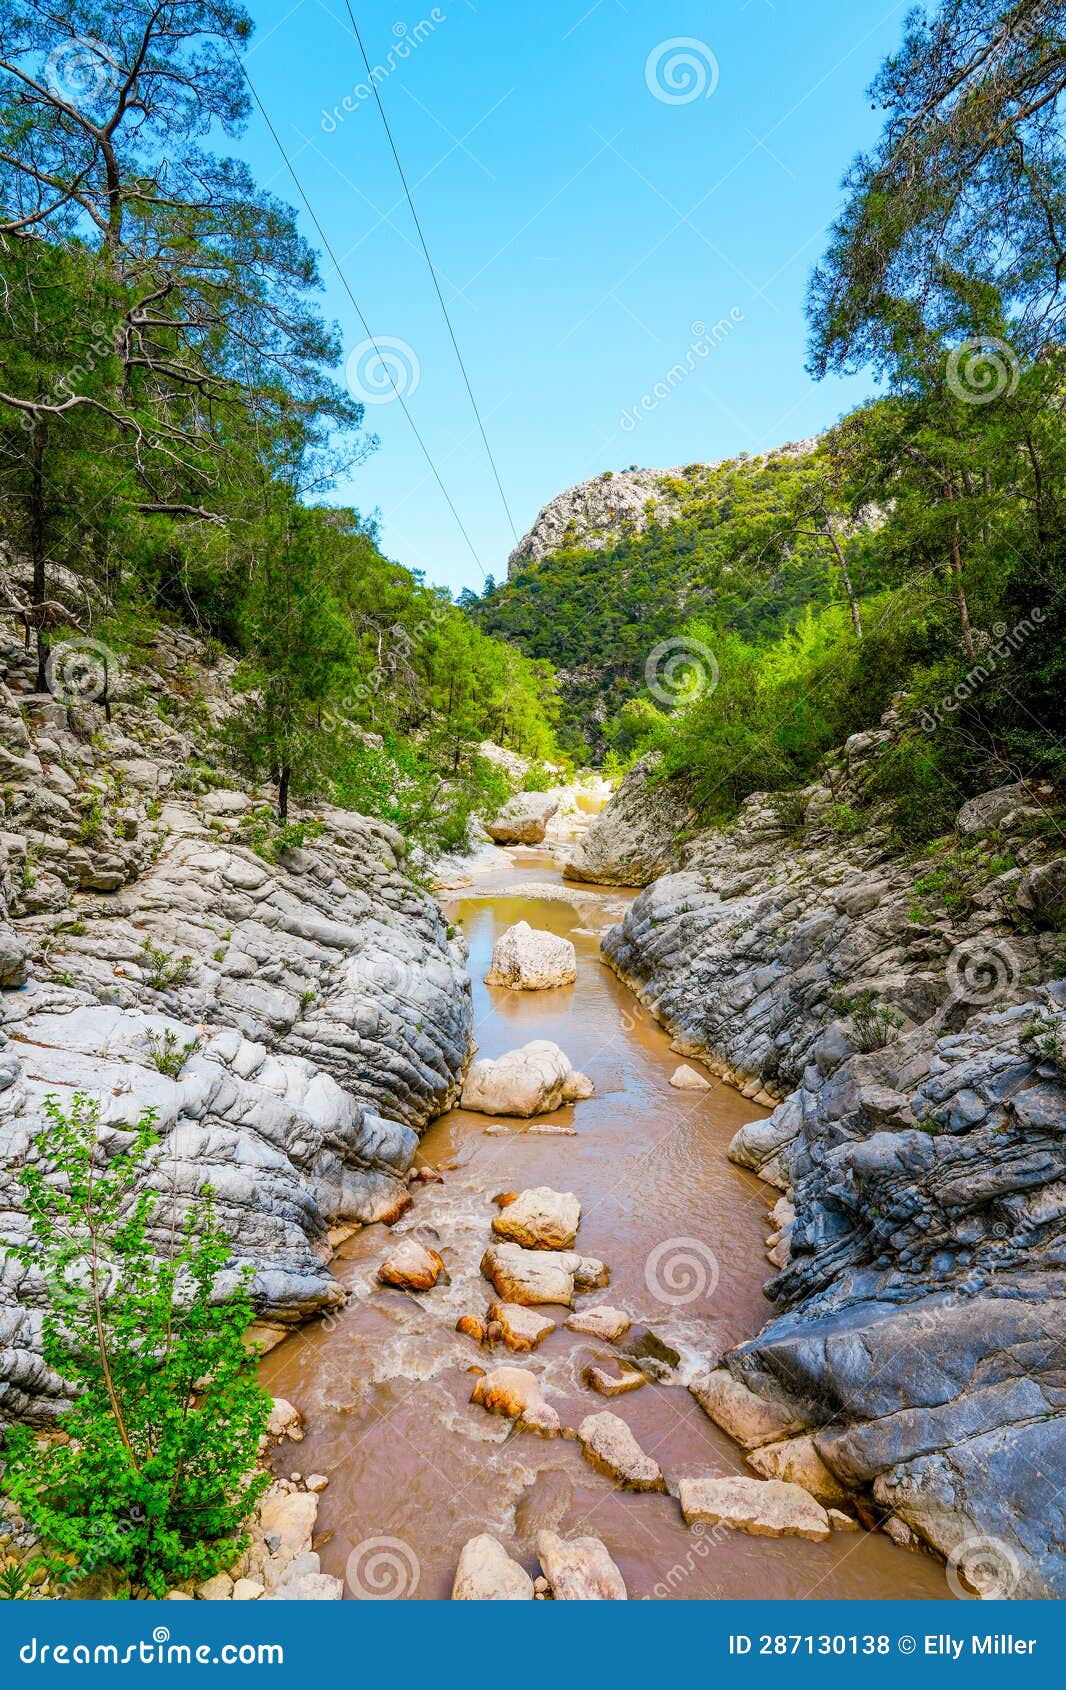 stream in goynuk canyon. nature in tÃ¼rkiye